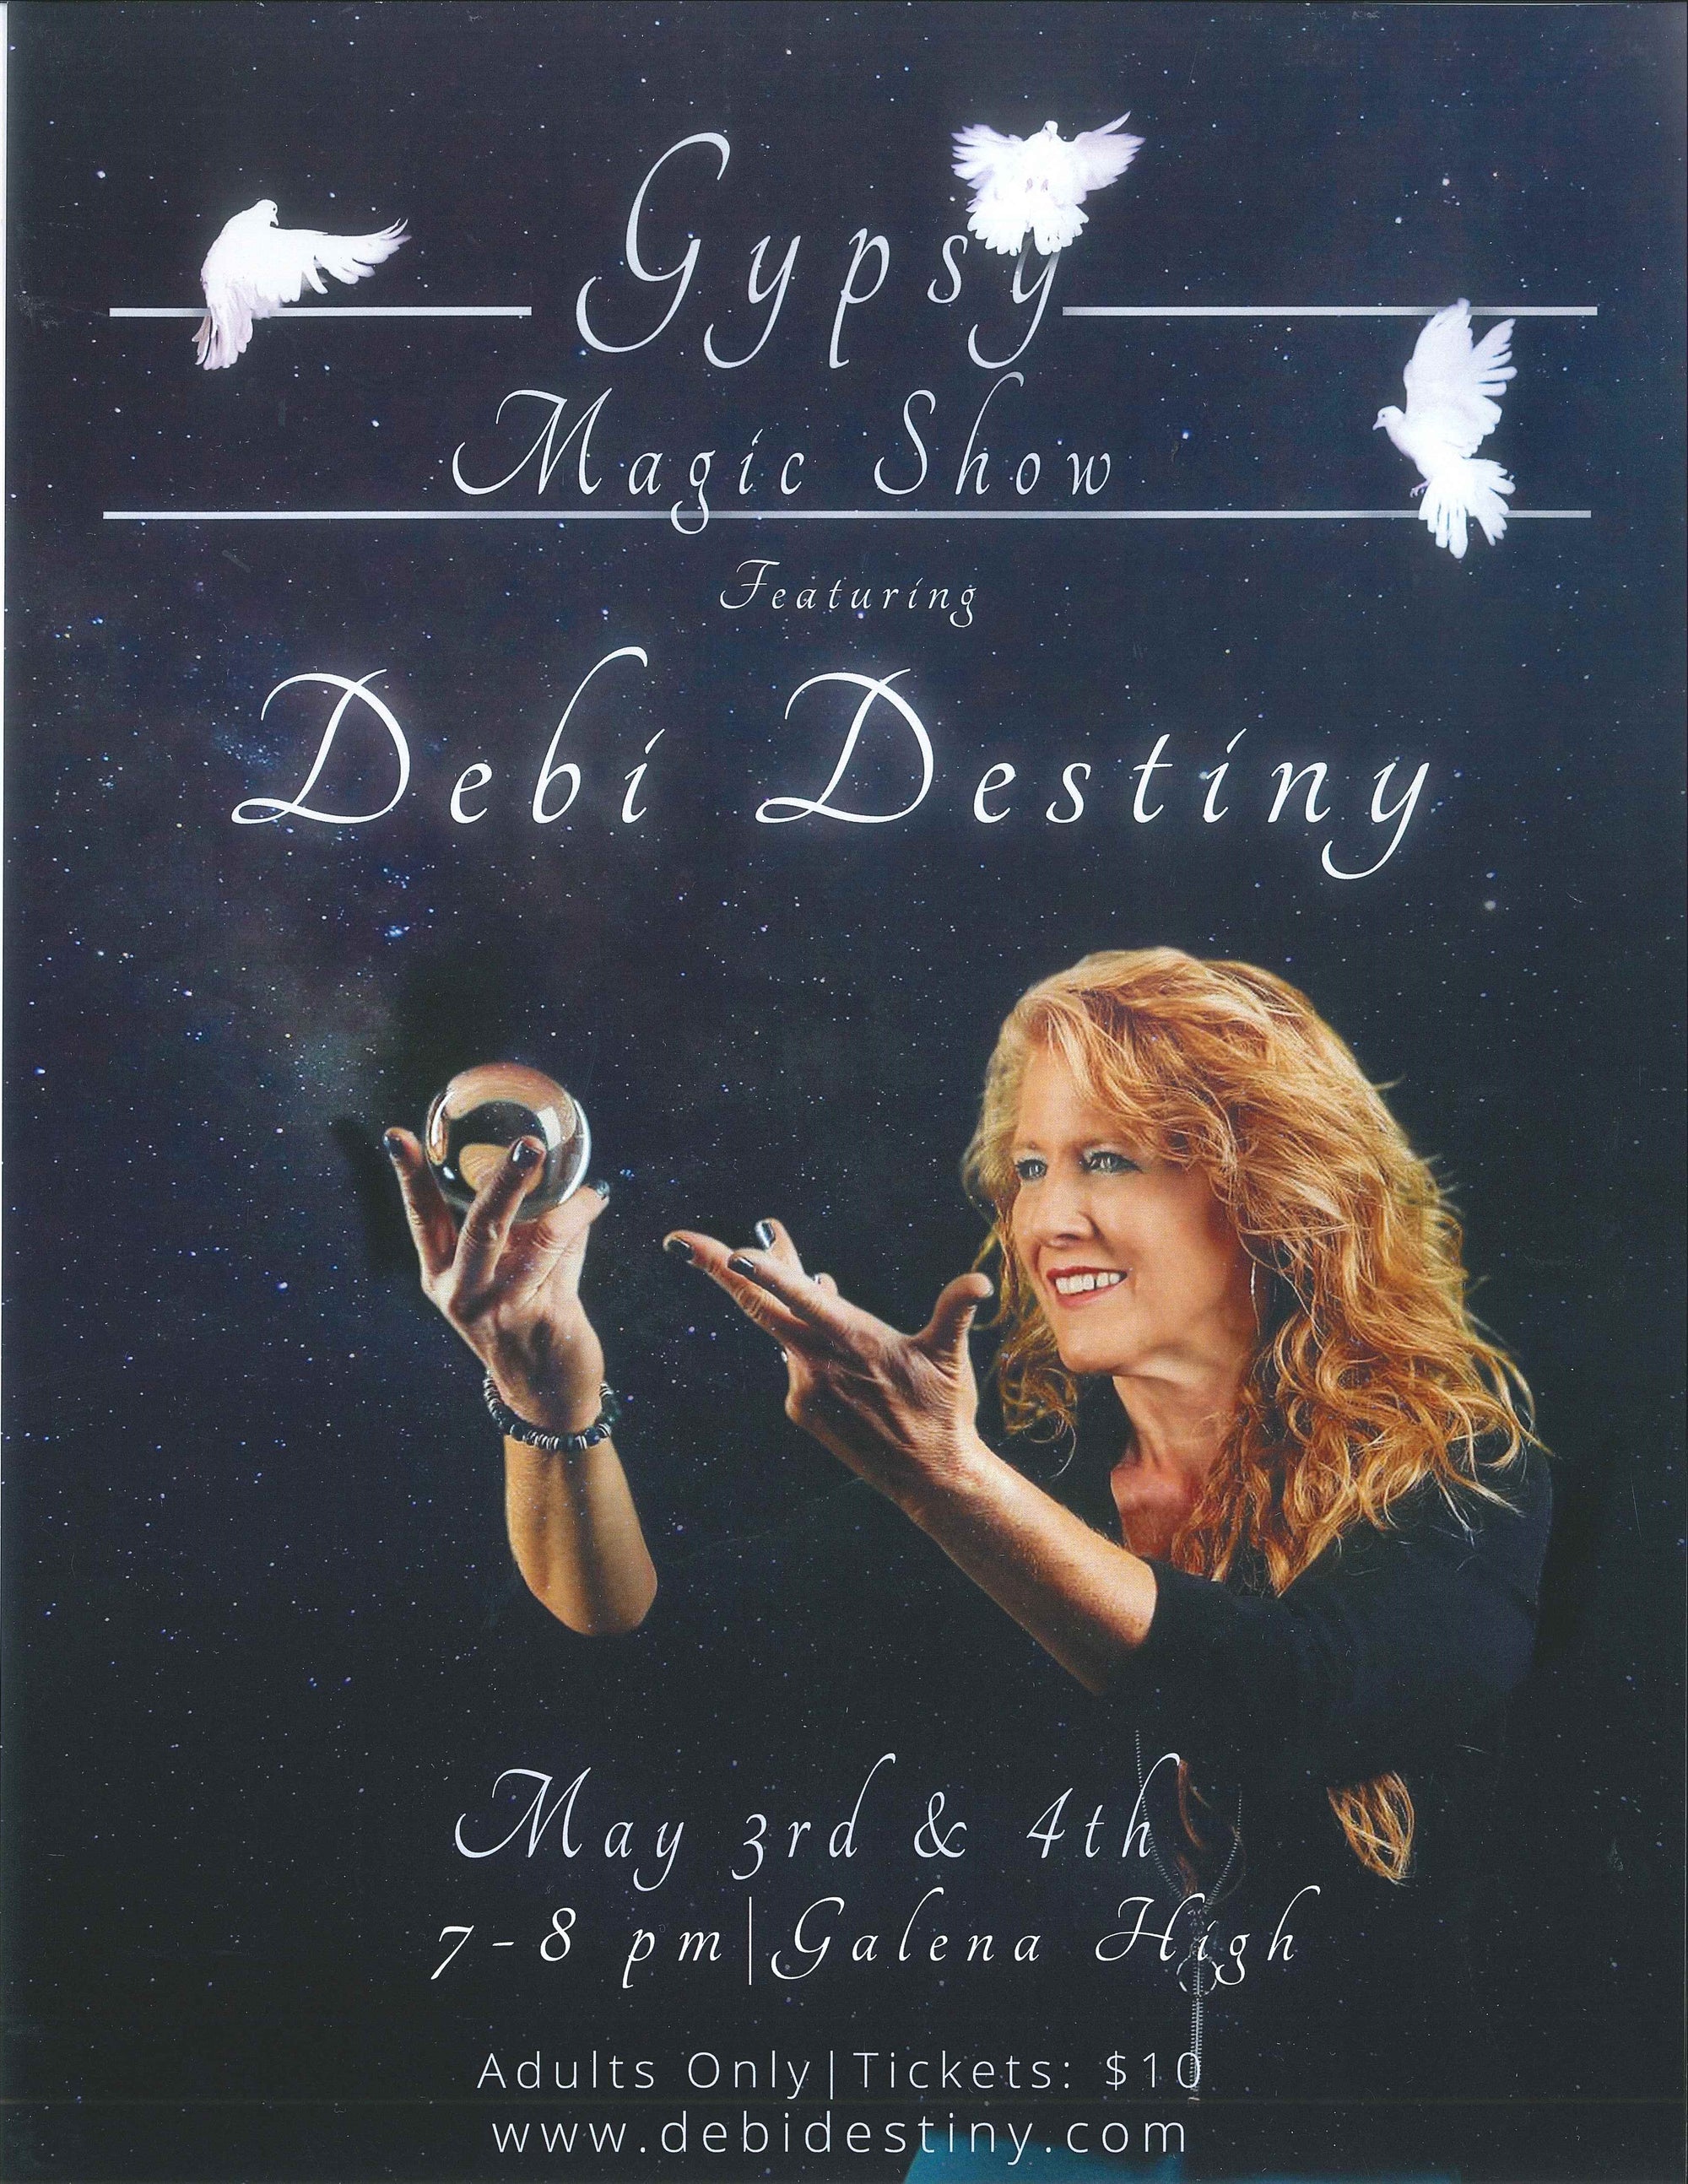 Gypsy magic show featuring Debi Destiny. Proceeds to benefit Catholic Charities